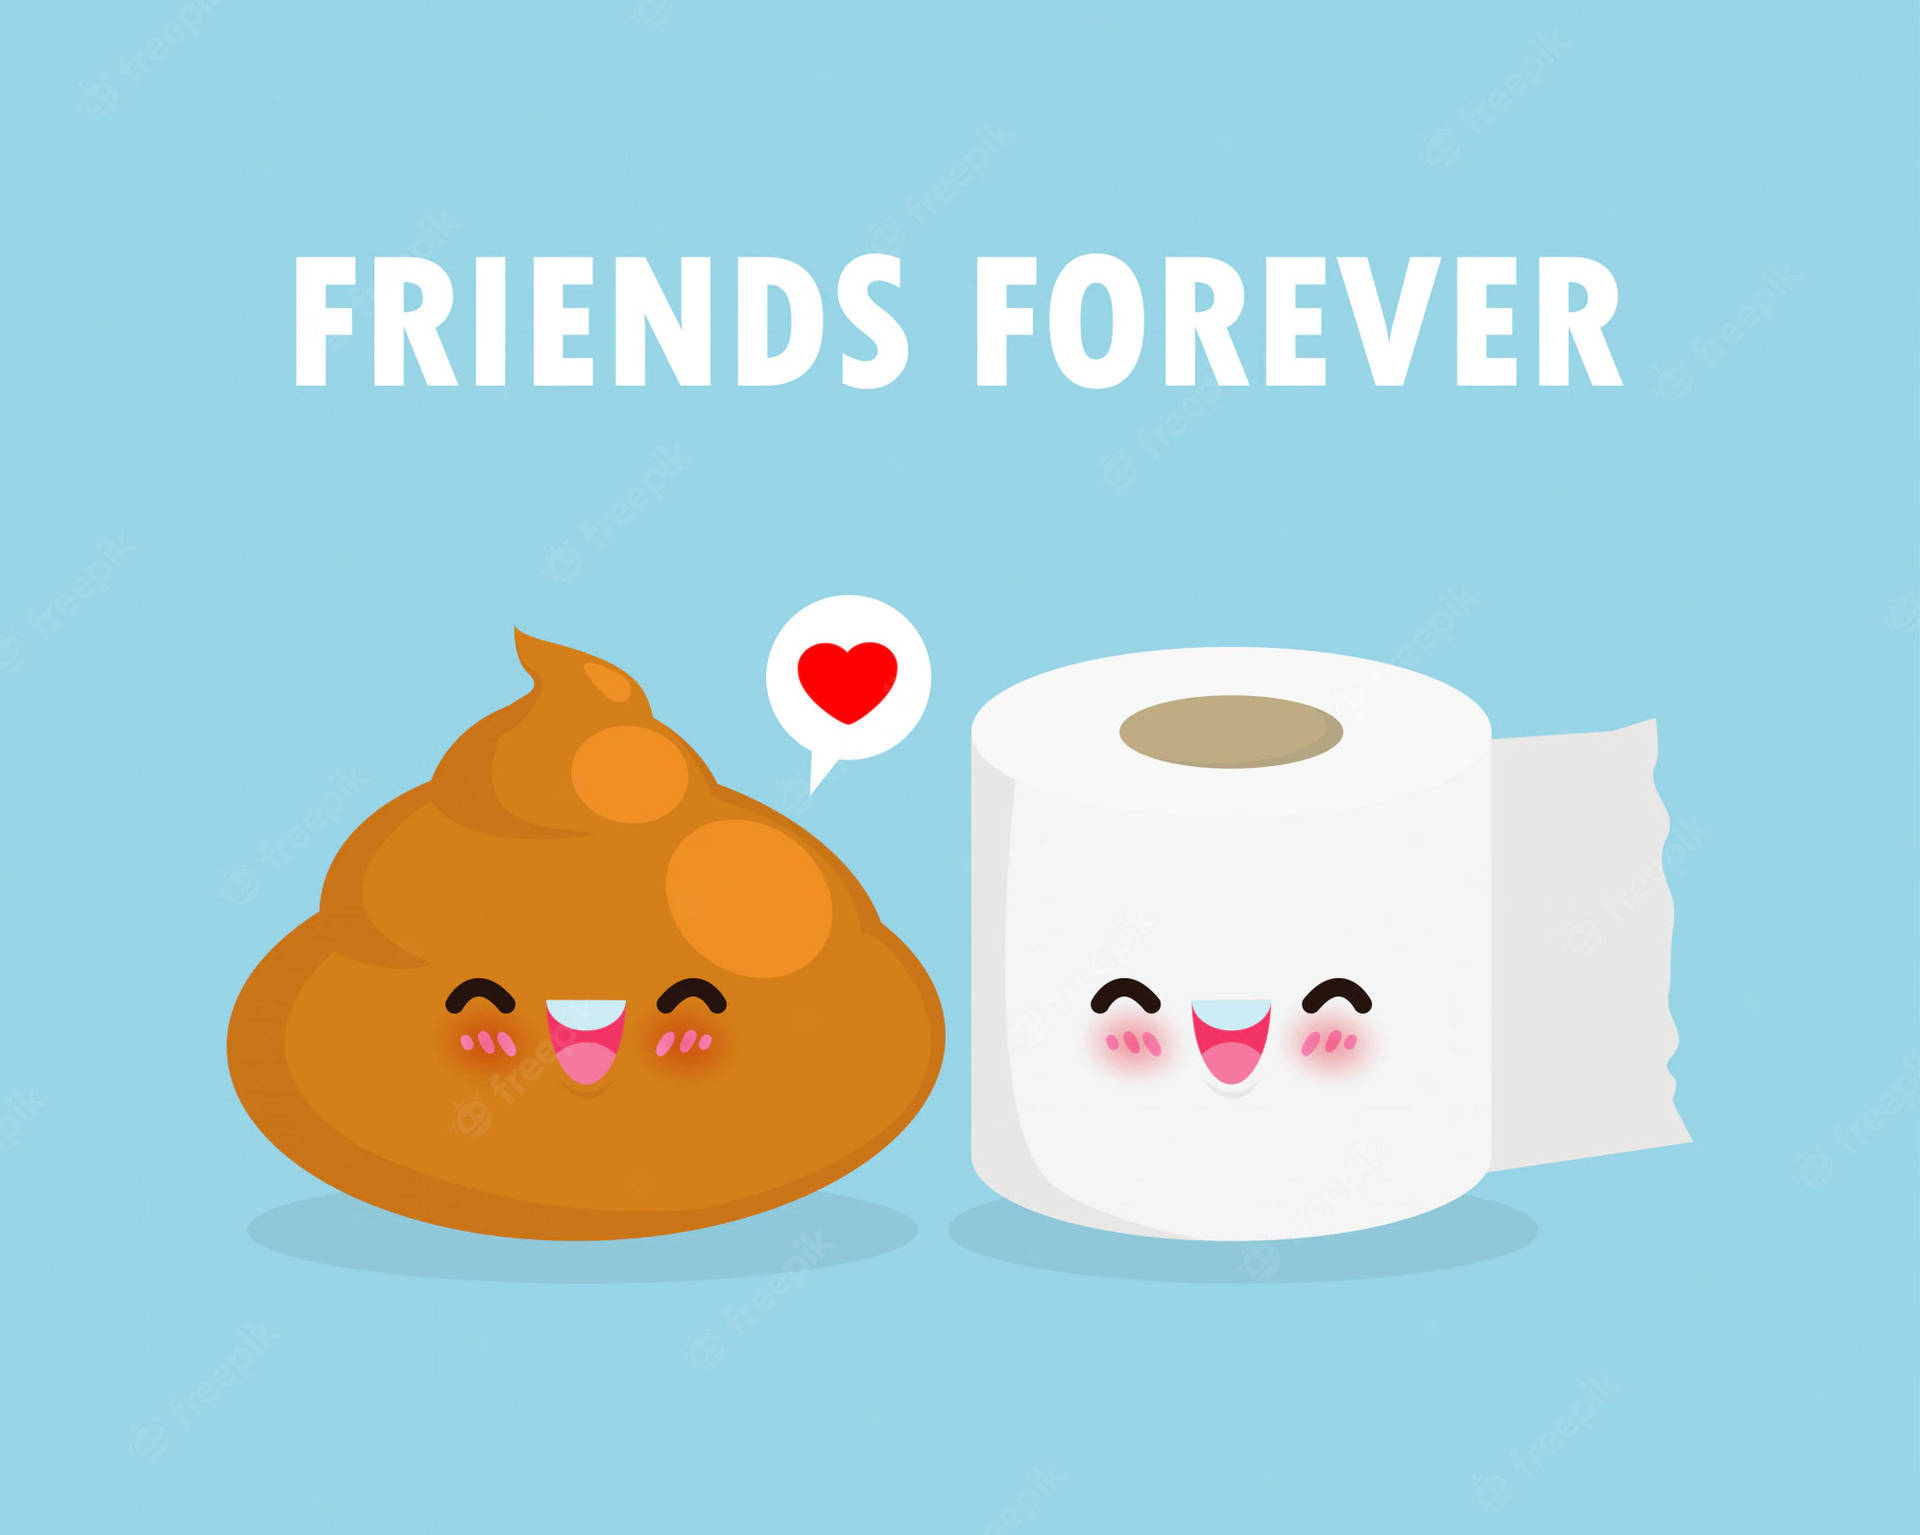 Cute Poop And Tissue Best Friend Wallpaper